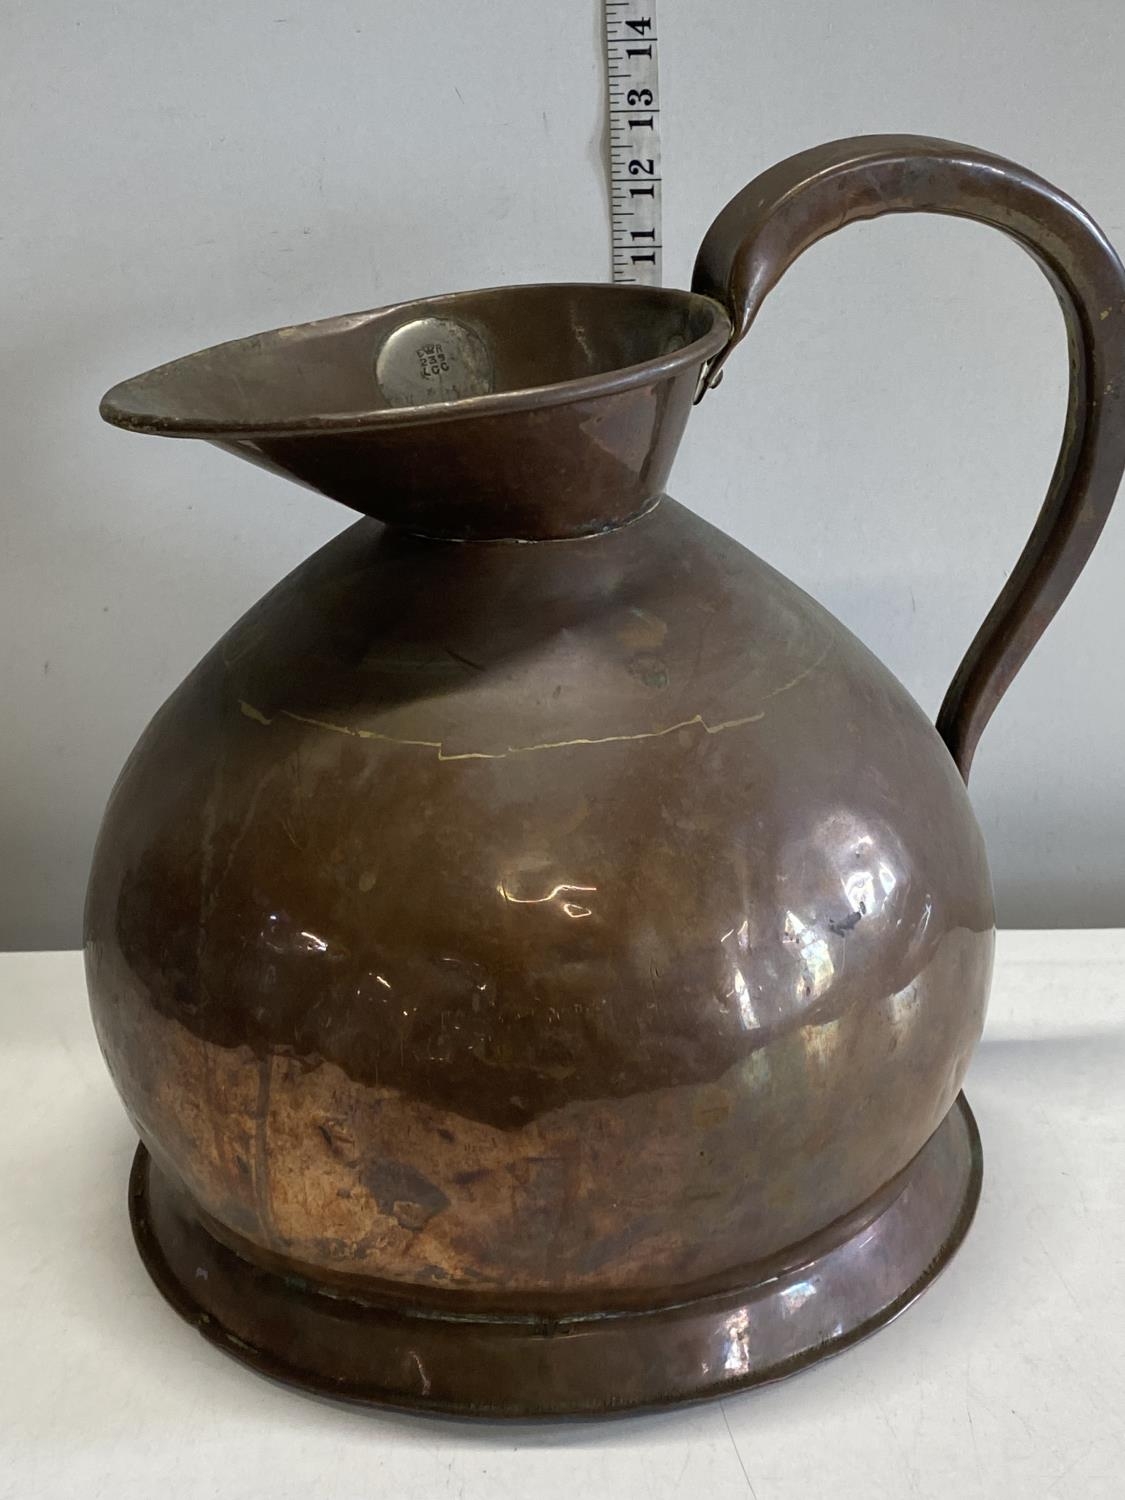 A large heavy copper two gallon jug